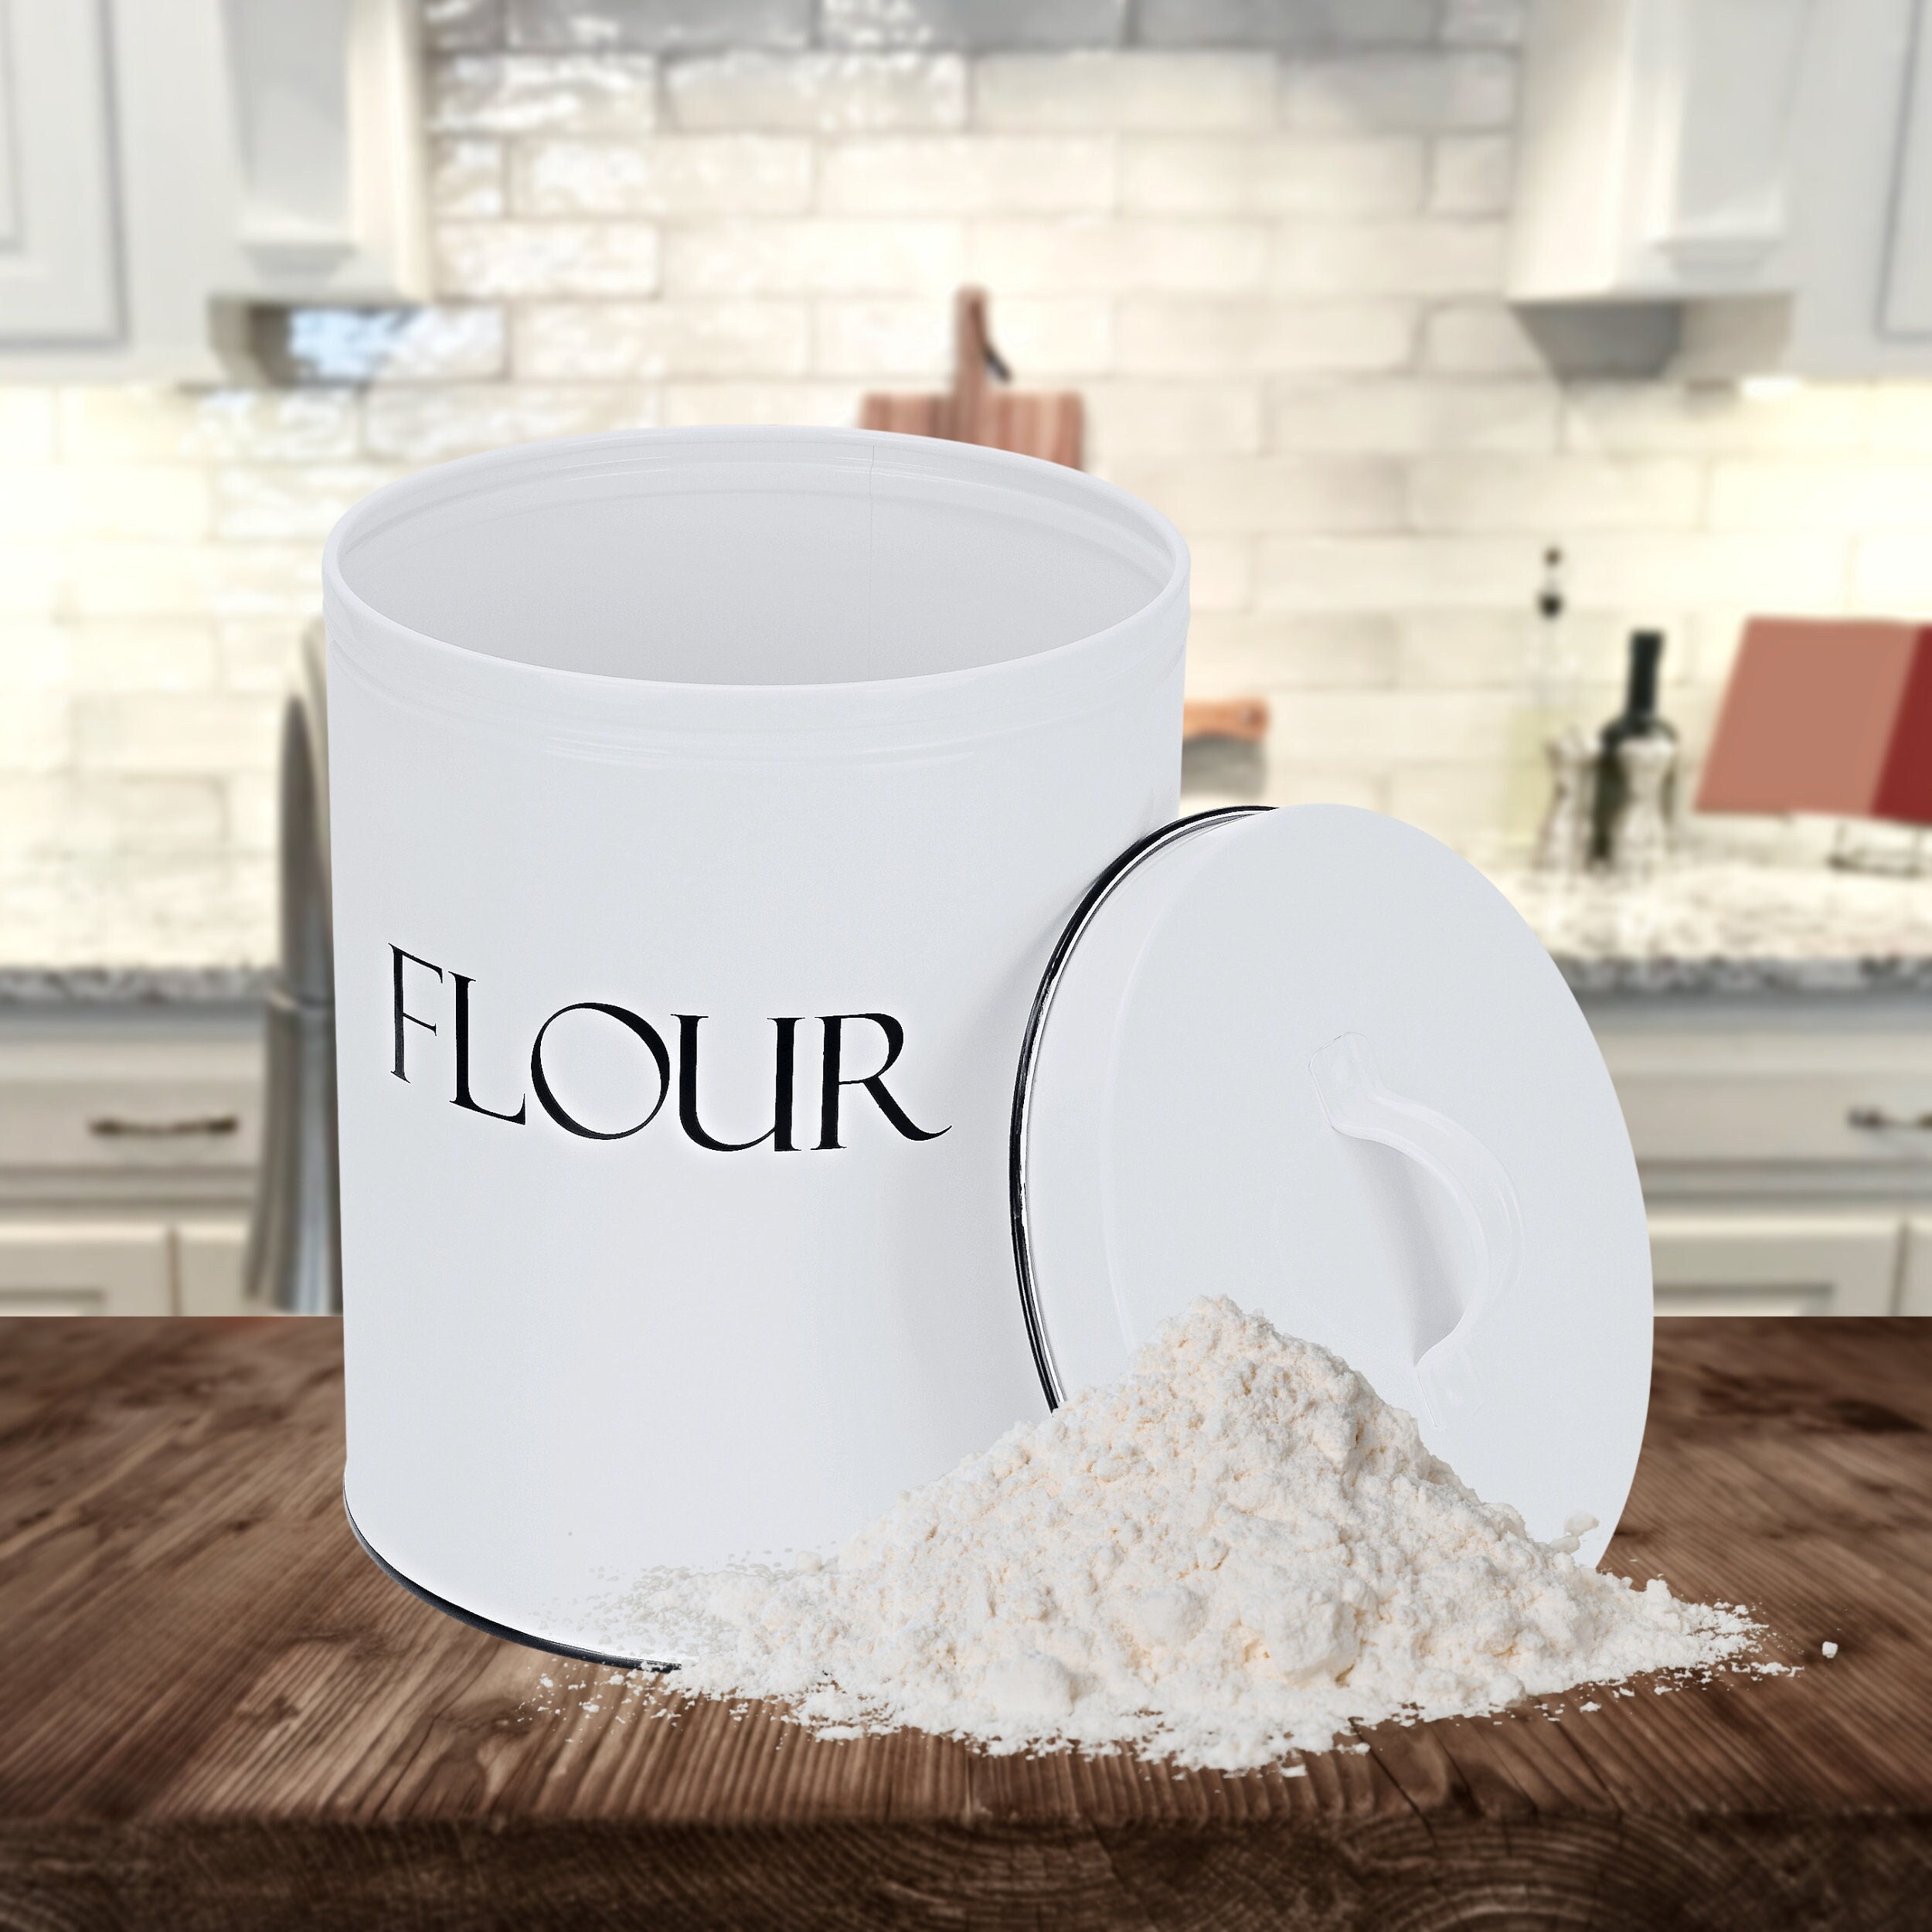 Large Flour Bucket